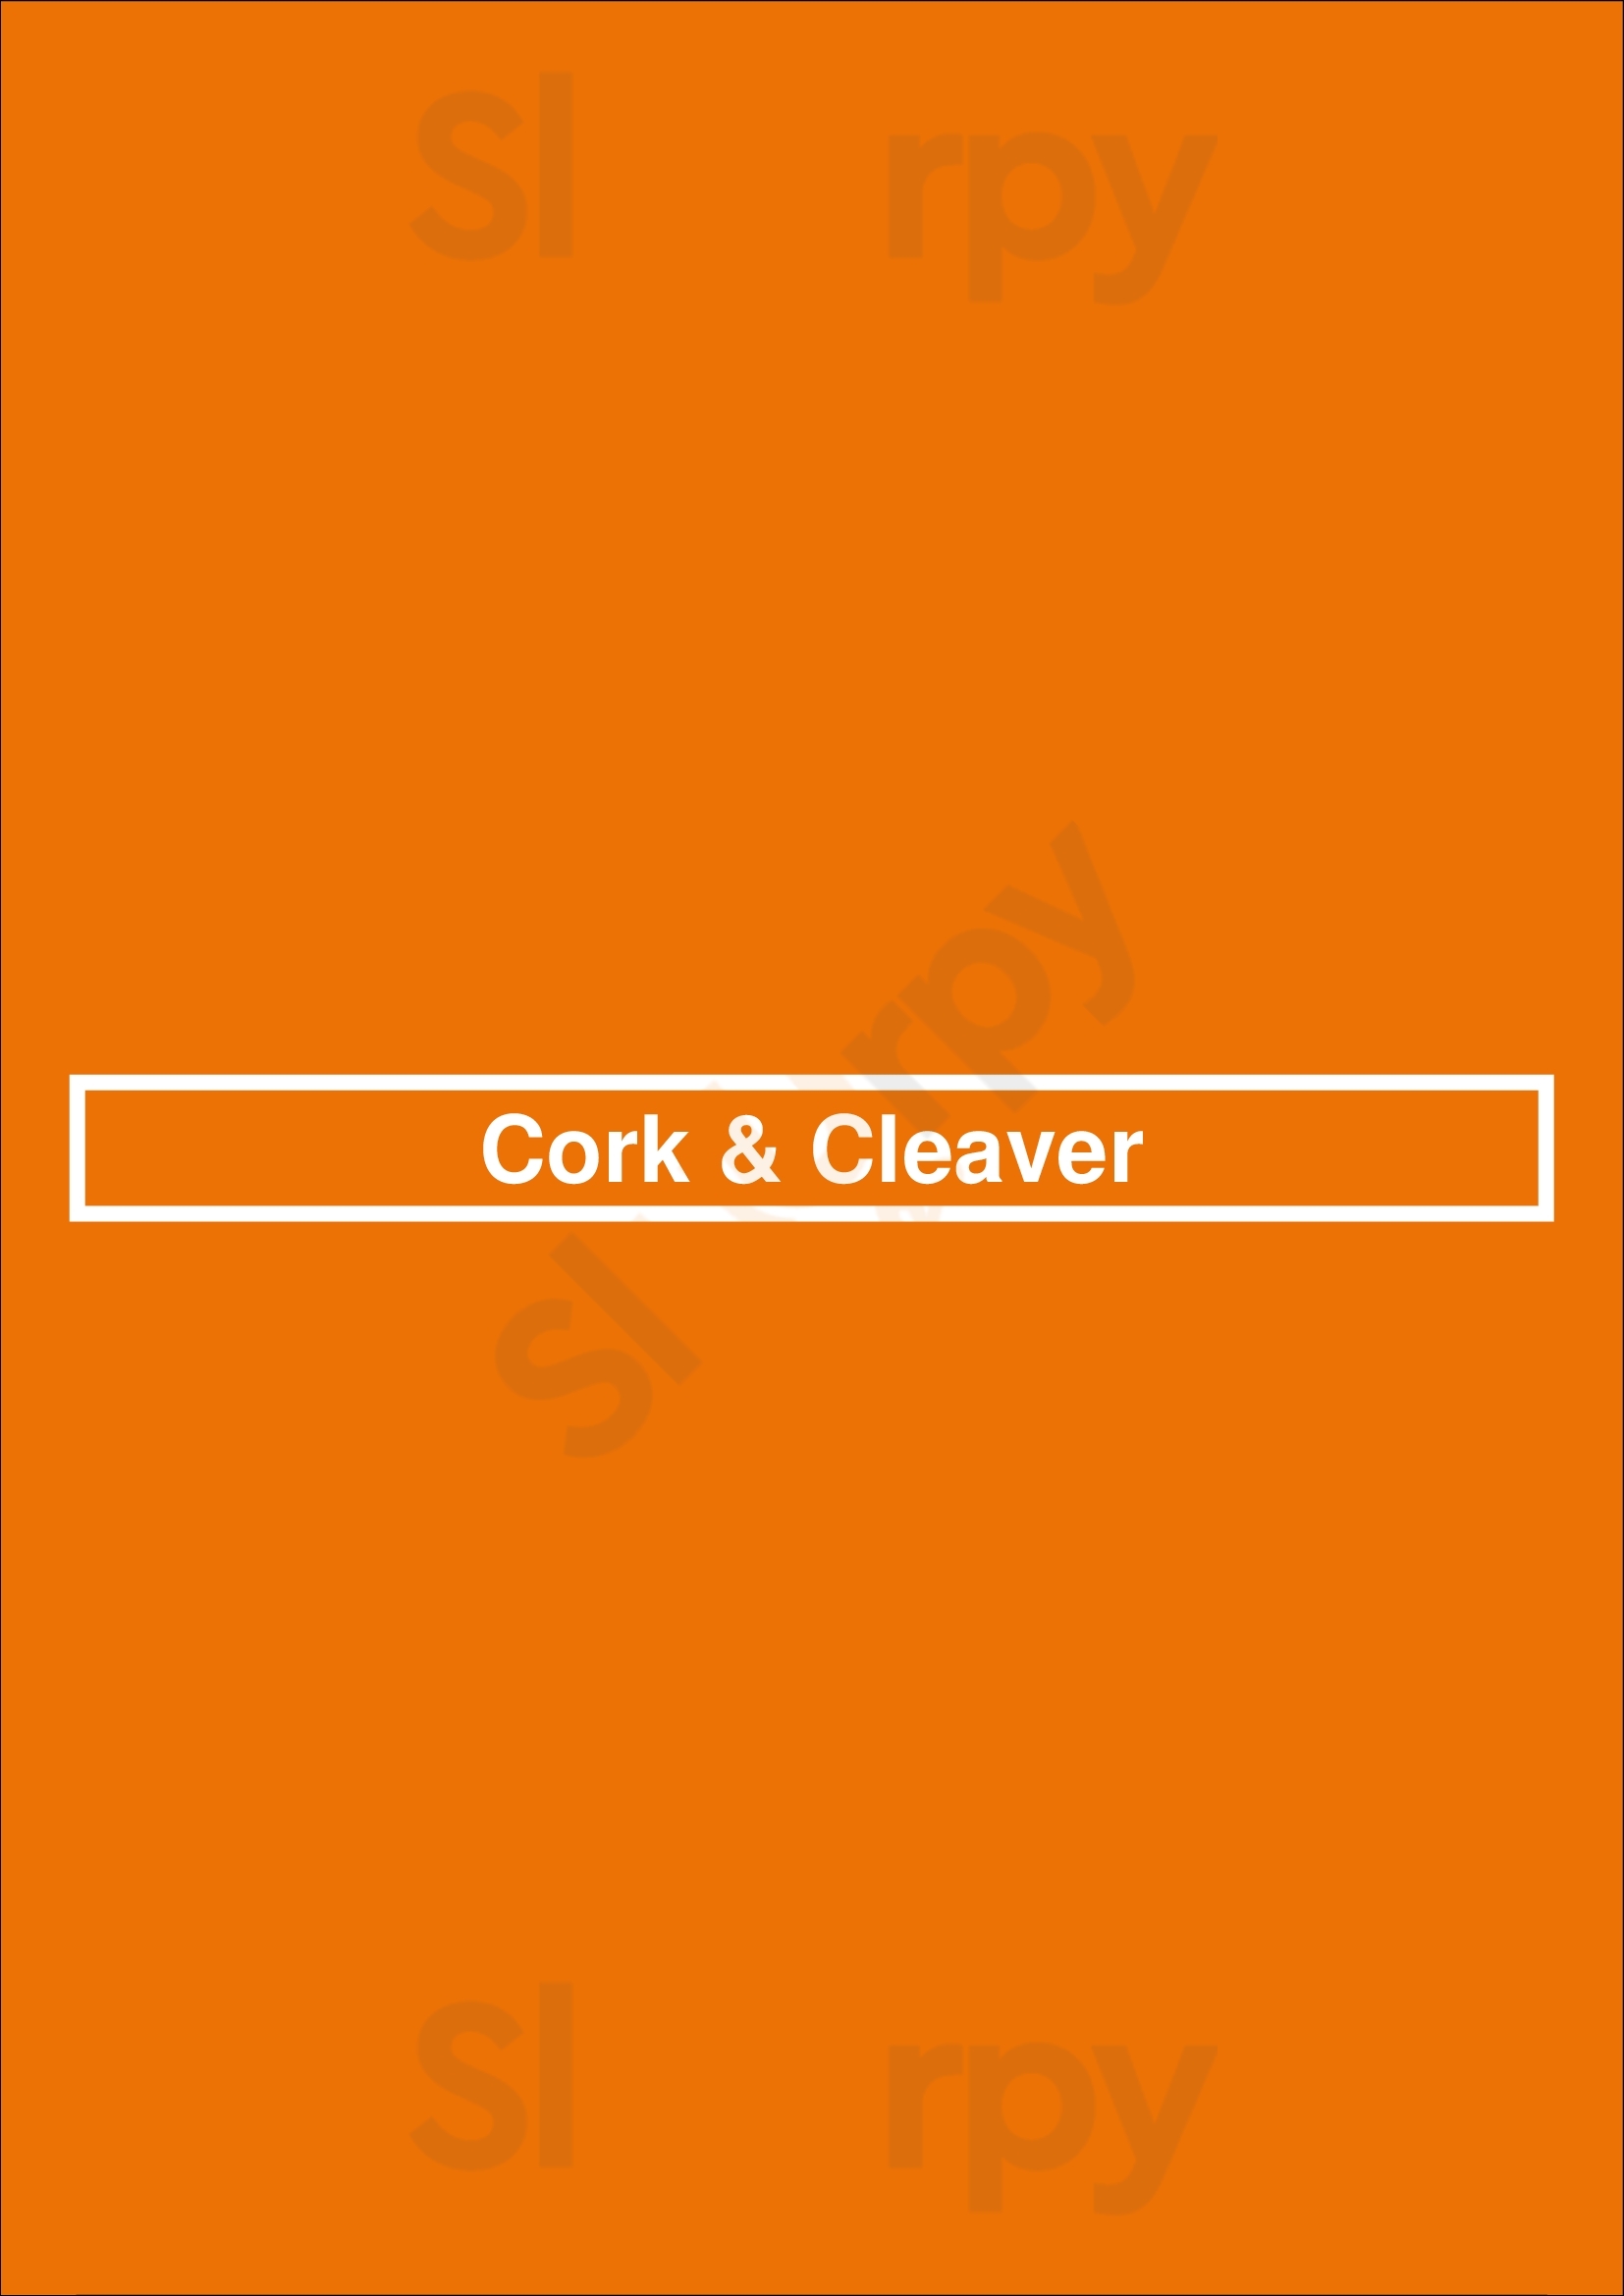 Cork & Cleaver Adelaide Menu - 1